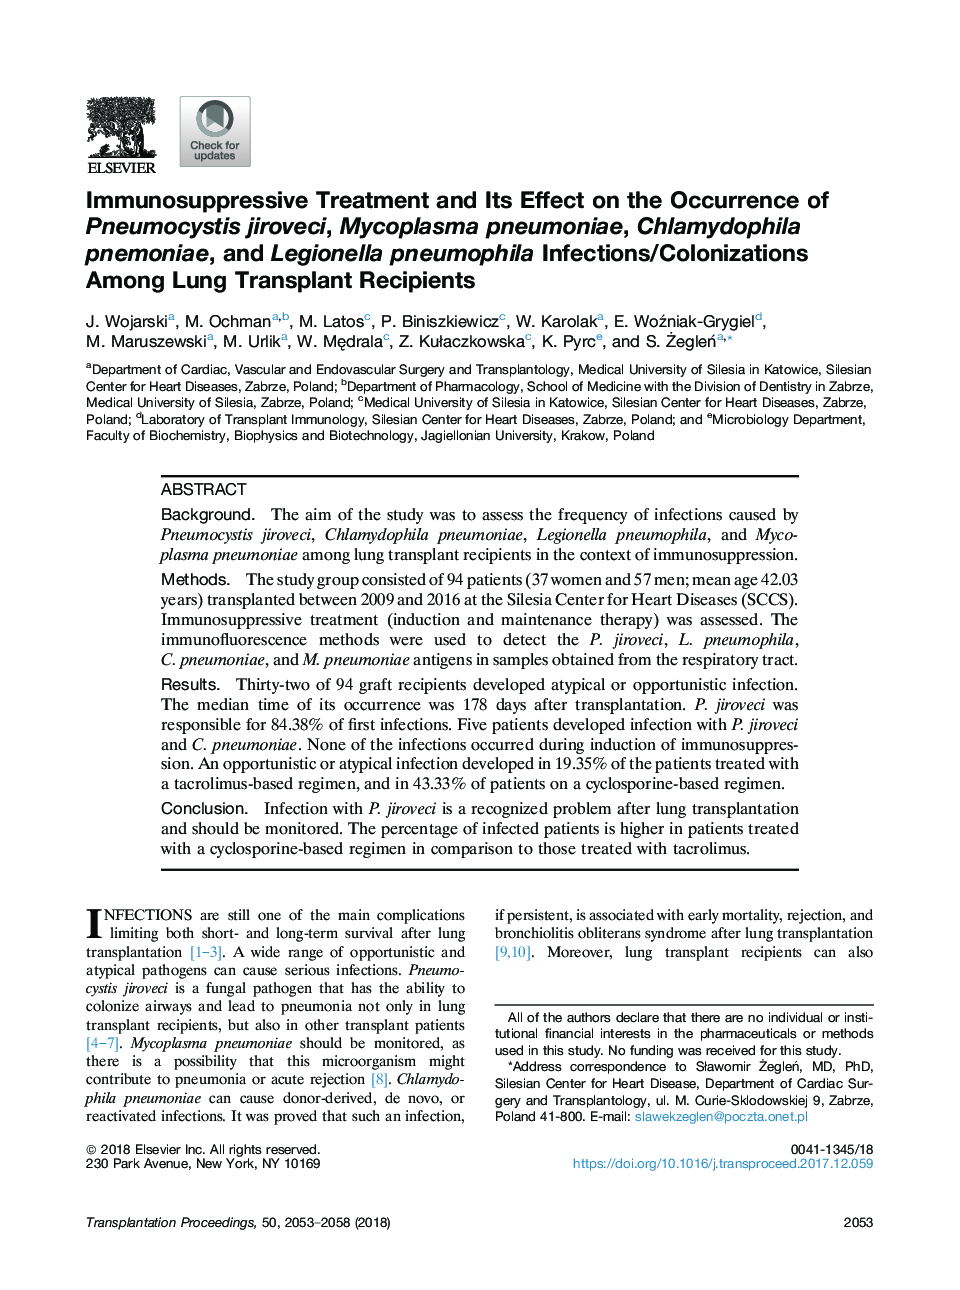 Immunosuppressive Treatment and Its Effect on the Occurrence of Pneumocystis jiroveci, Mycoplasma pneumoniae, Chlamydophila pnemoniae, and Legionella pneumophila Infections/Colonizations Among Lung Transplant Recipients